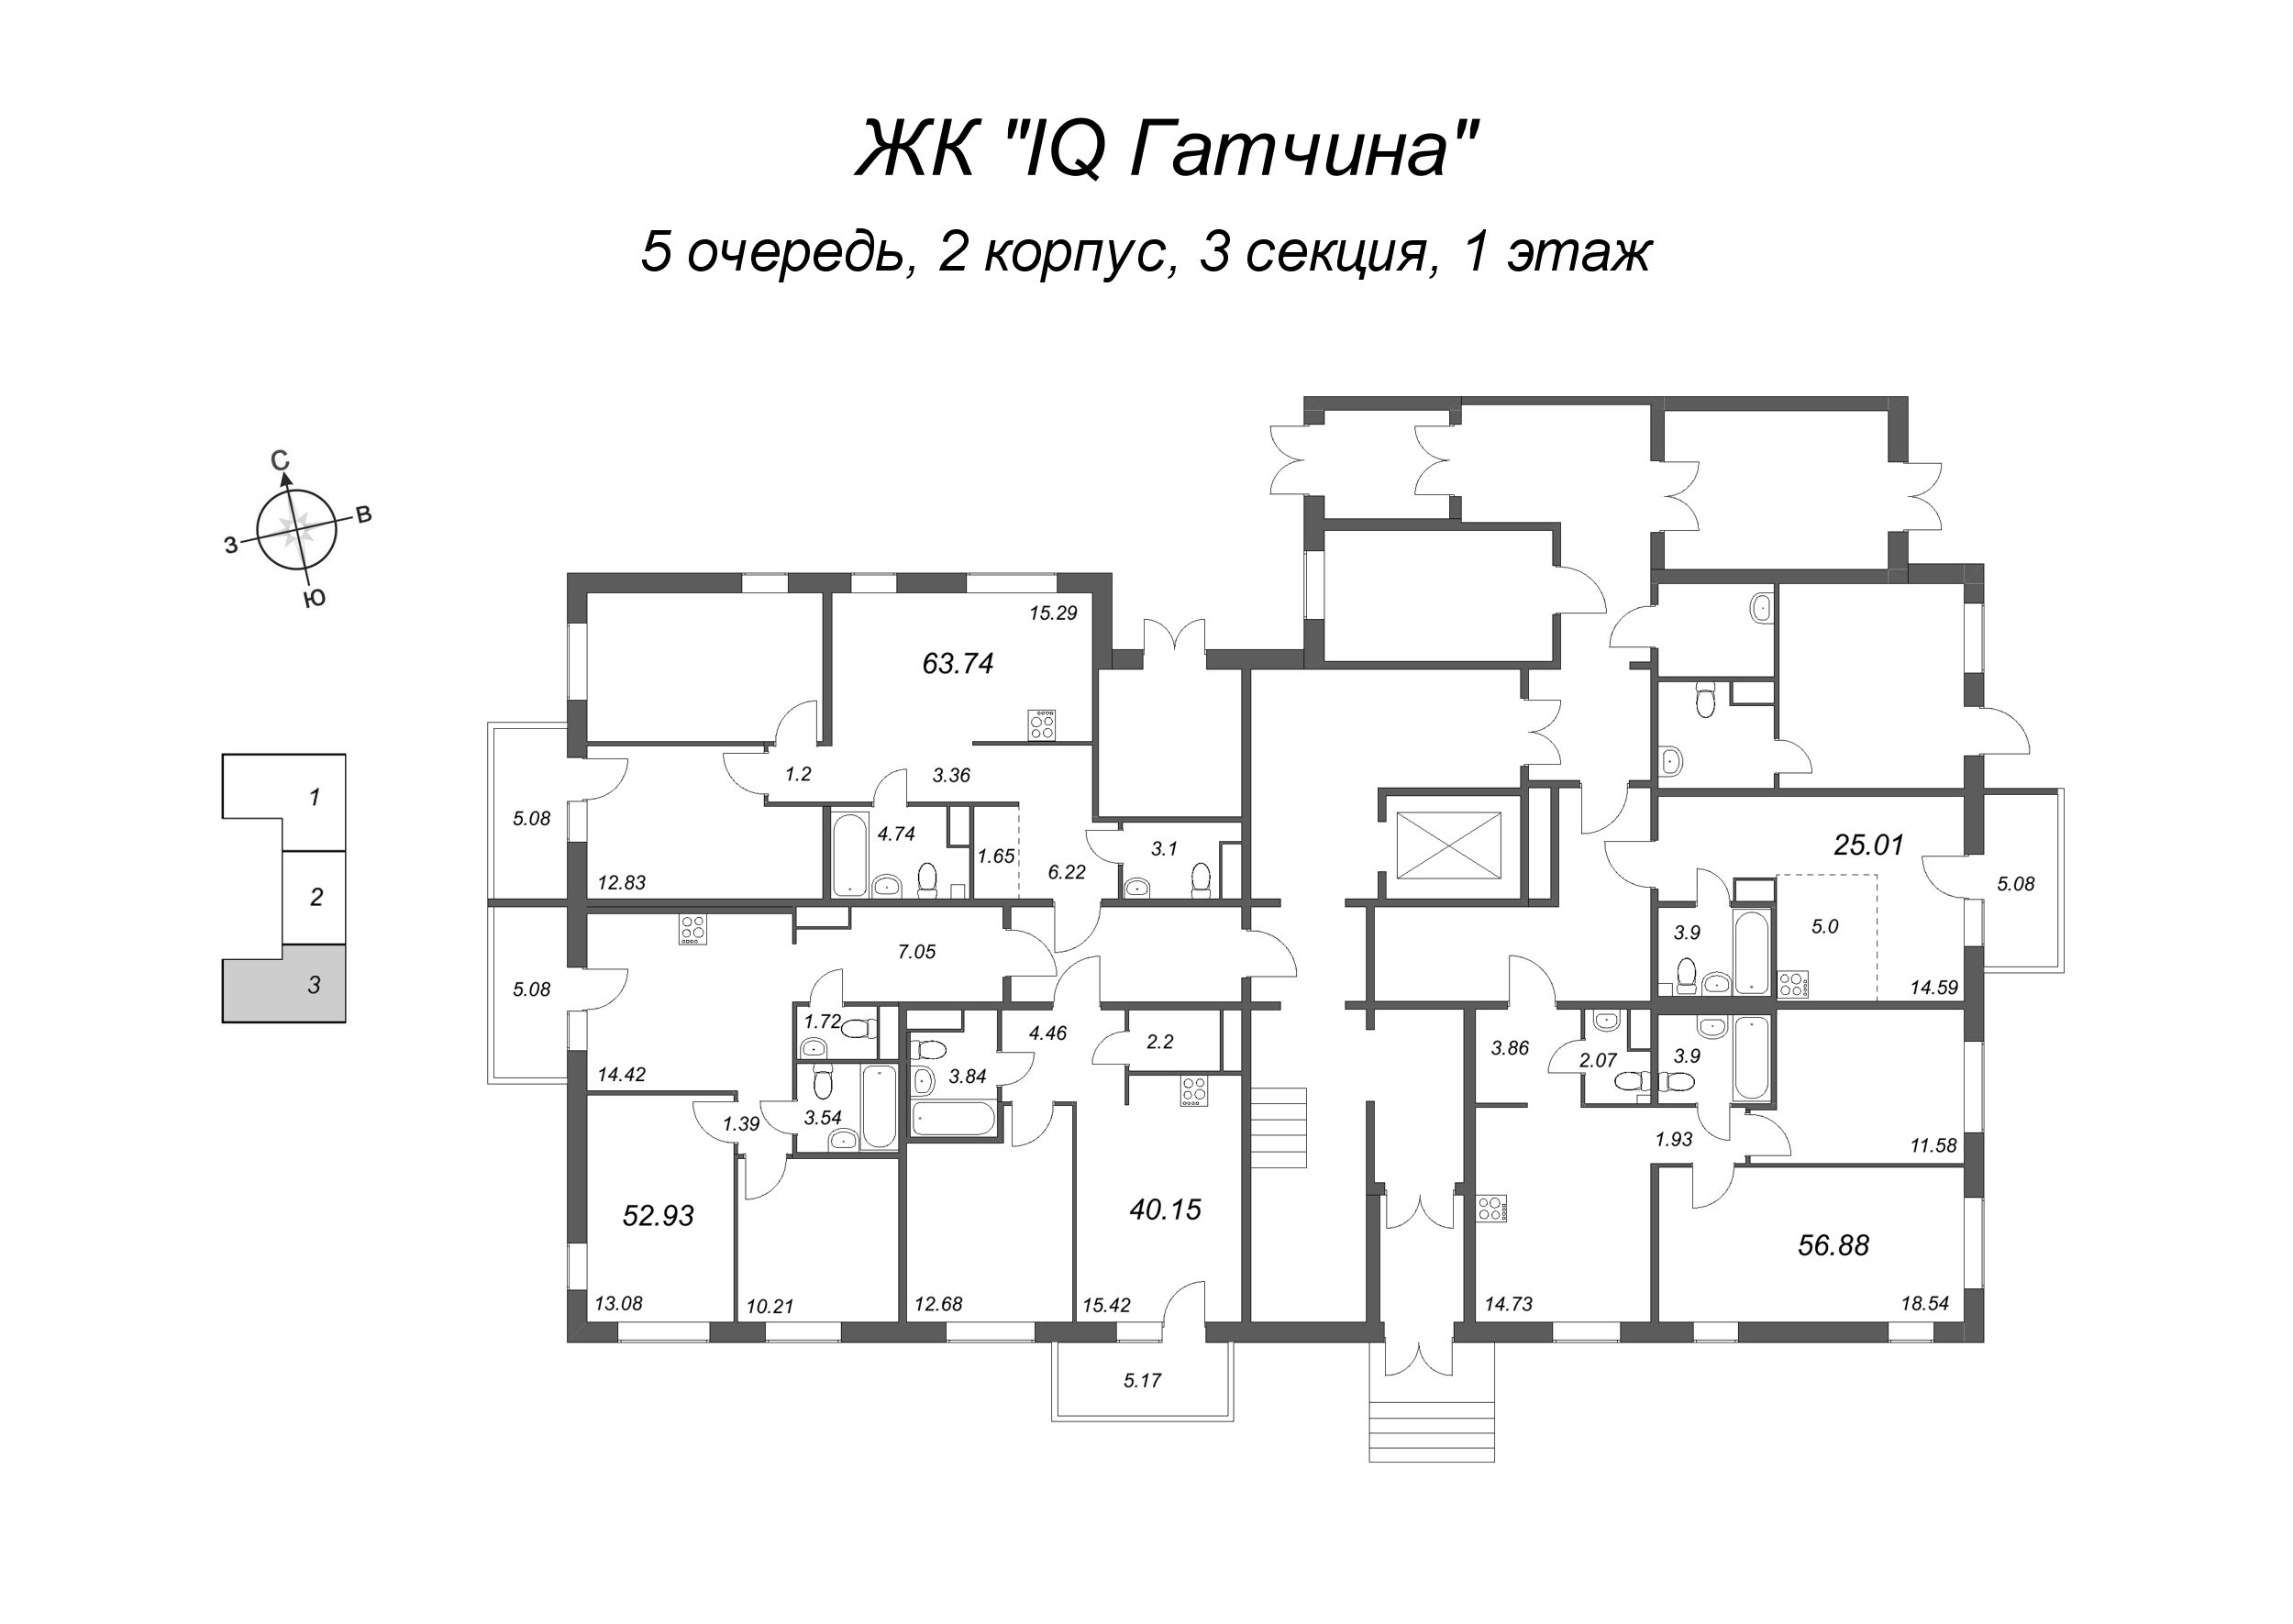 2-комнатная (Евро) квартира, 43.77 м² - планировка этажа